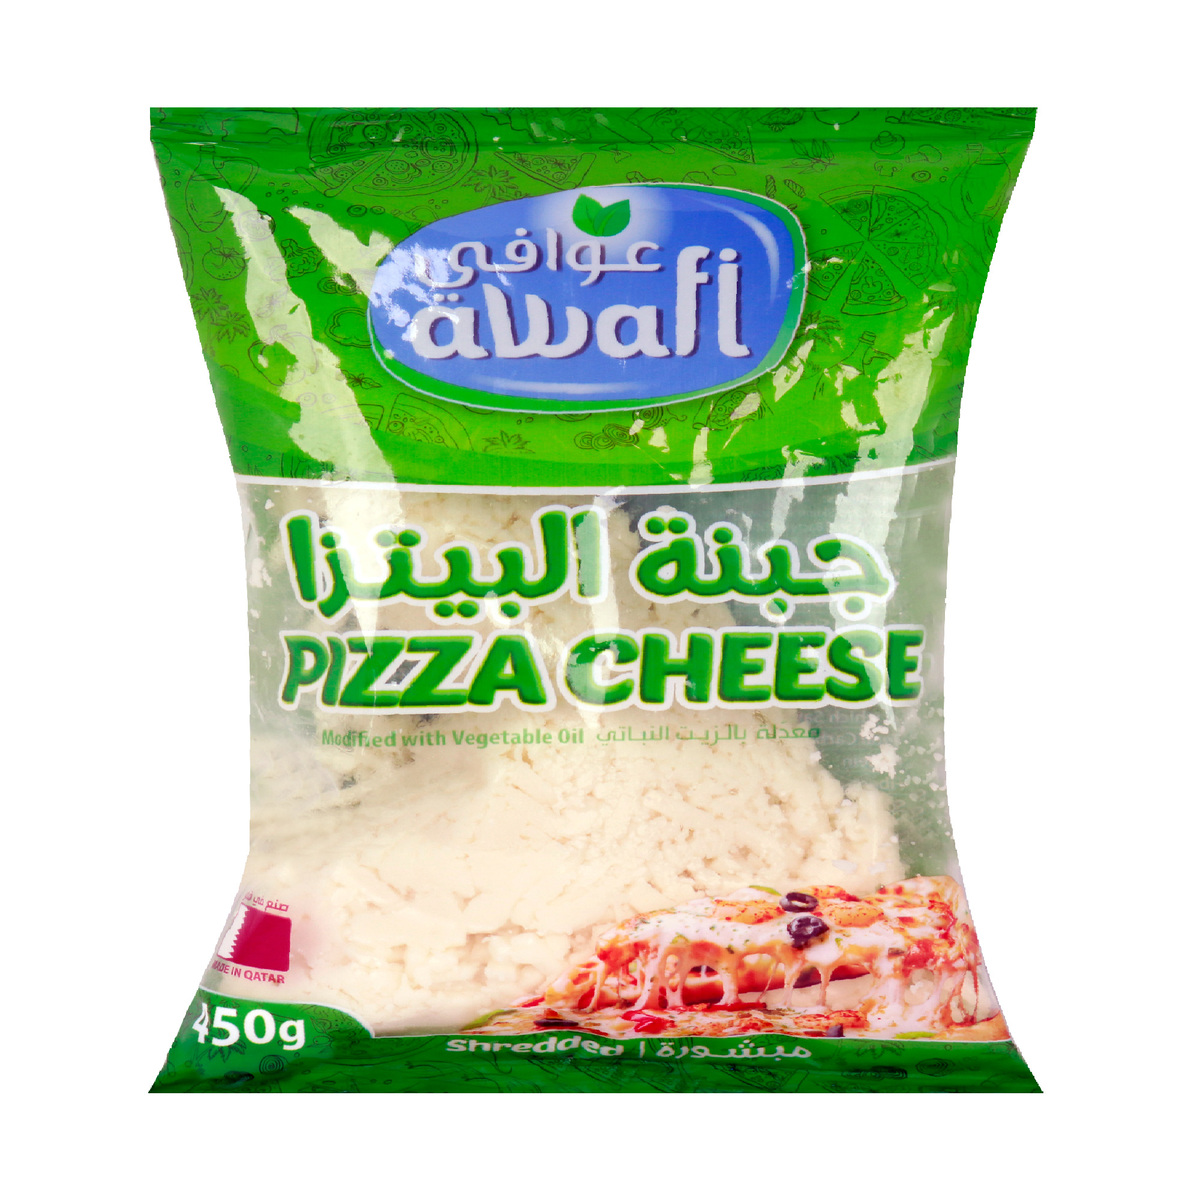 Awafi Shredded Mozzarella Pizza Cheese 450g